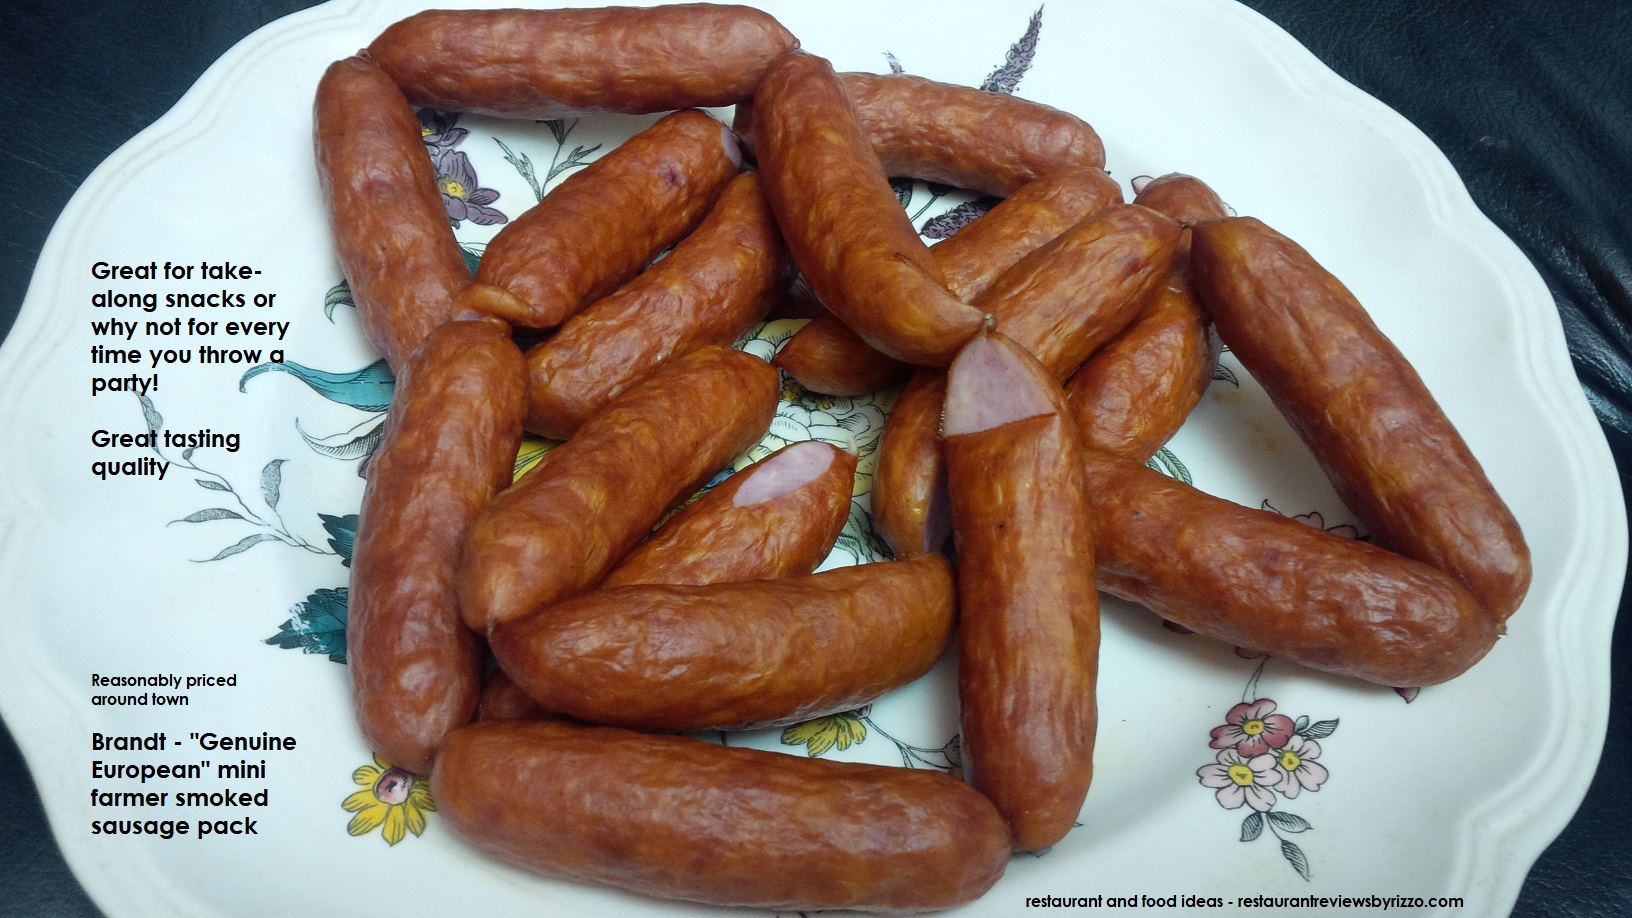 Brandt mini sausage - European quality